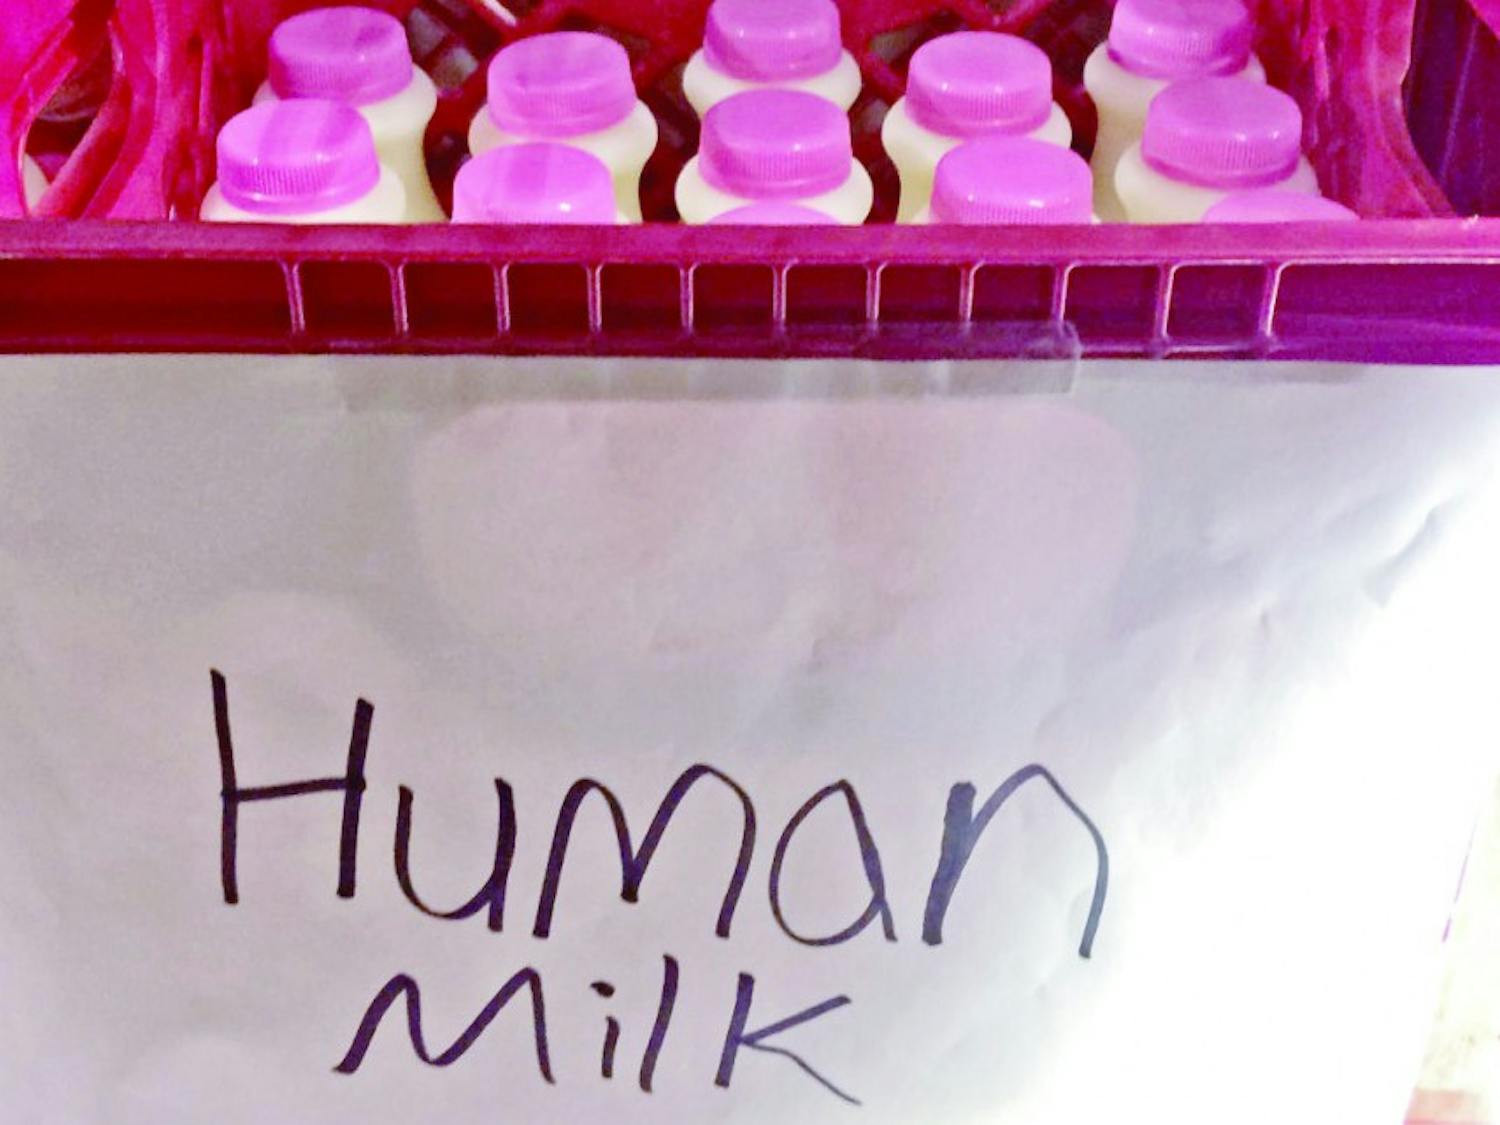 Human Milk